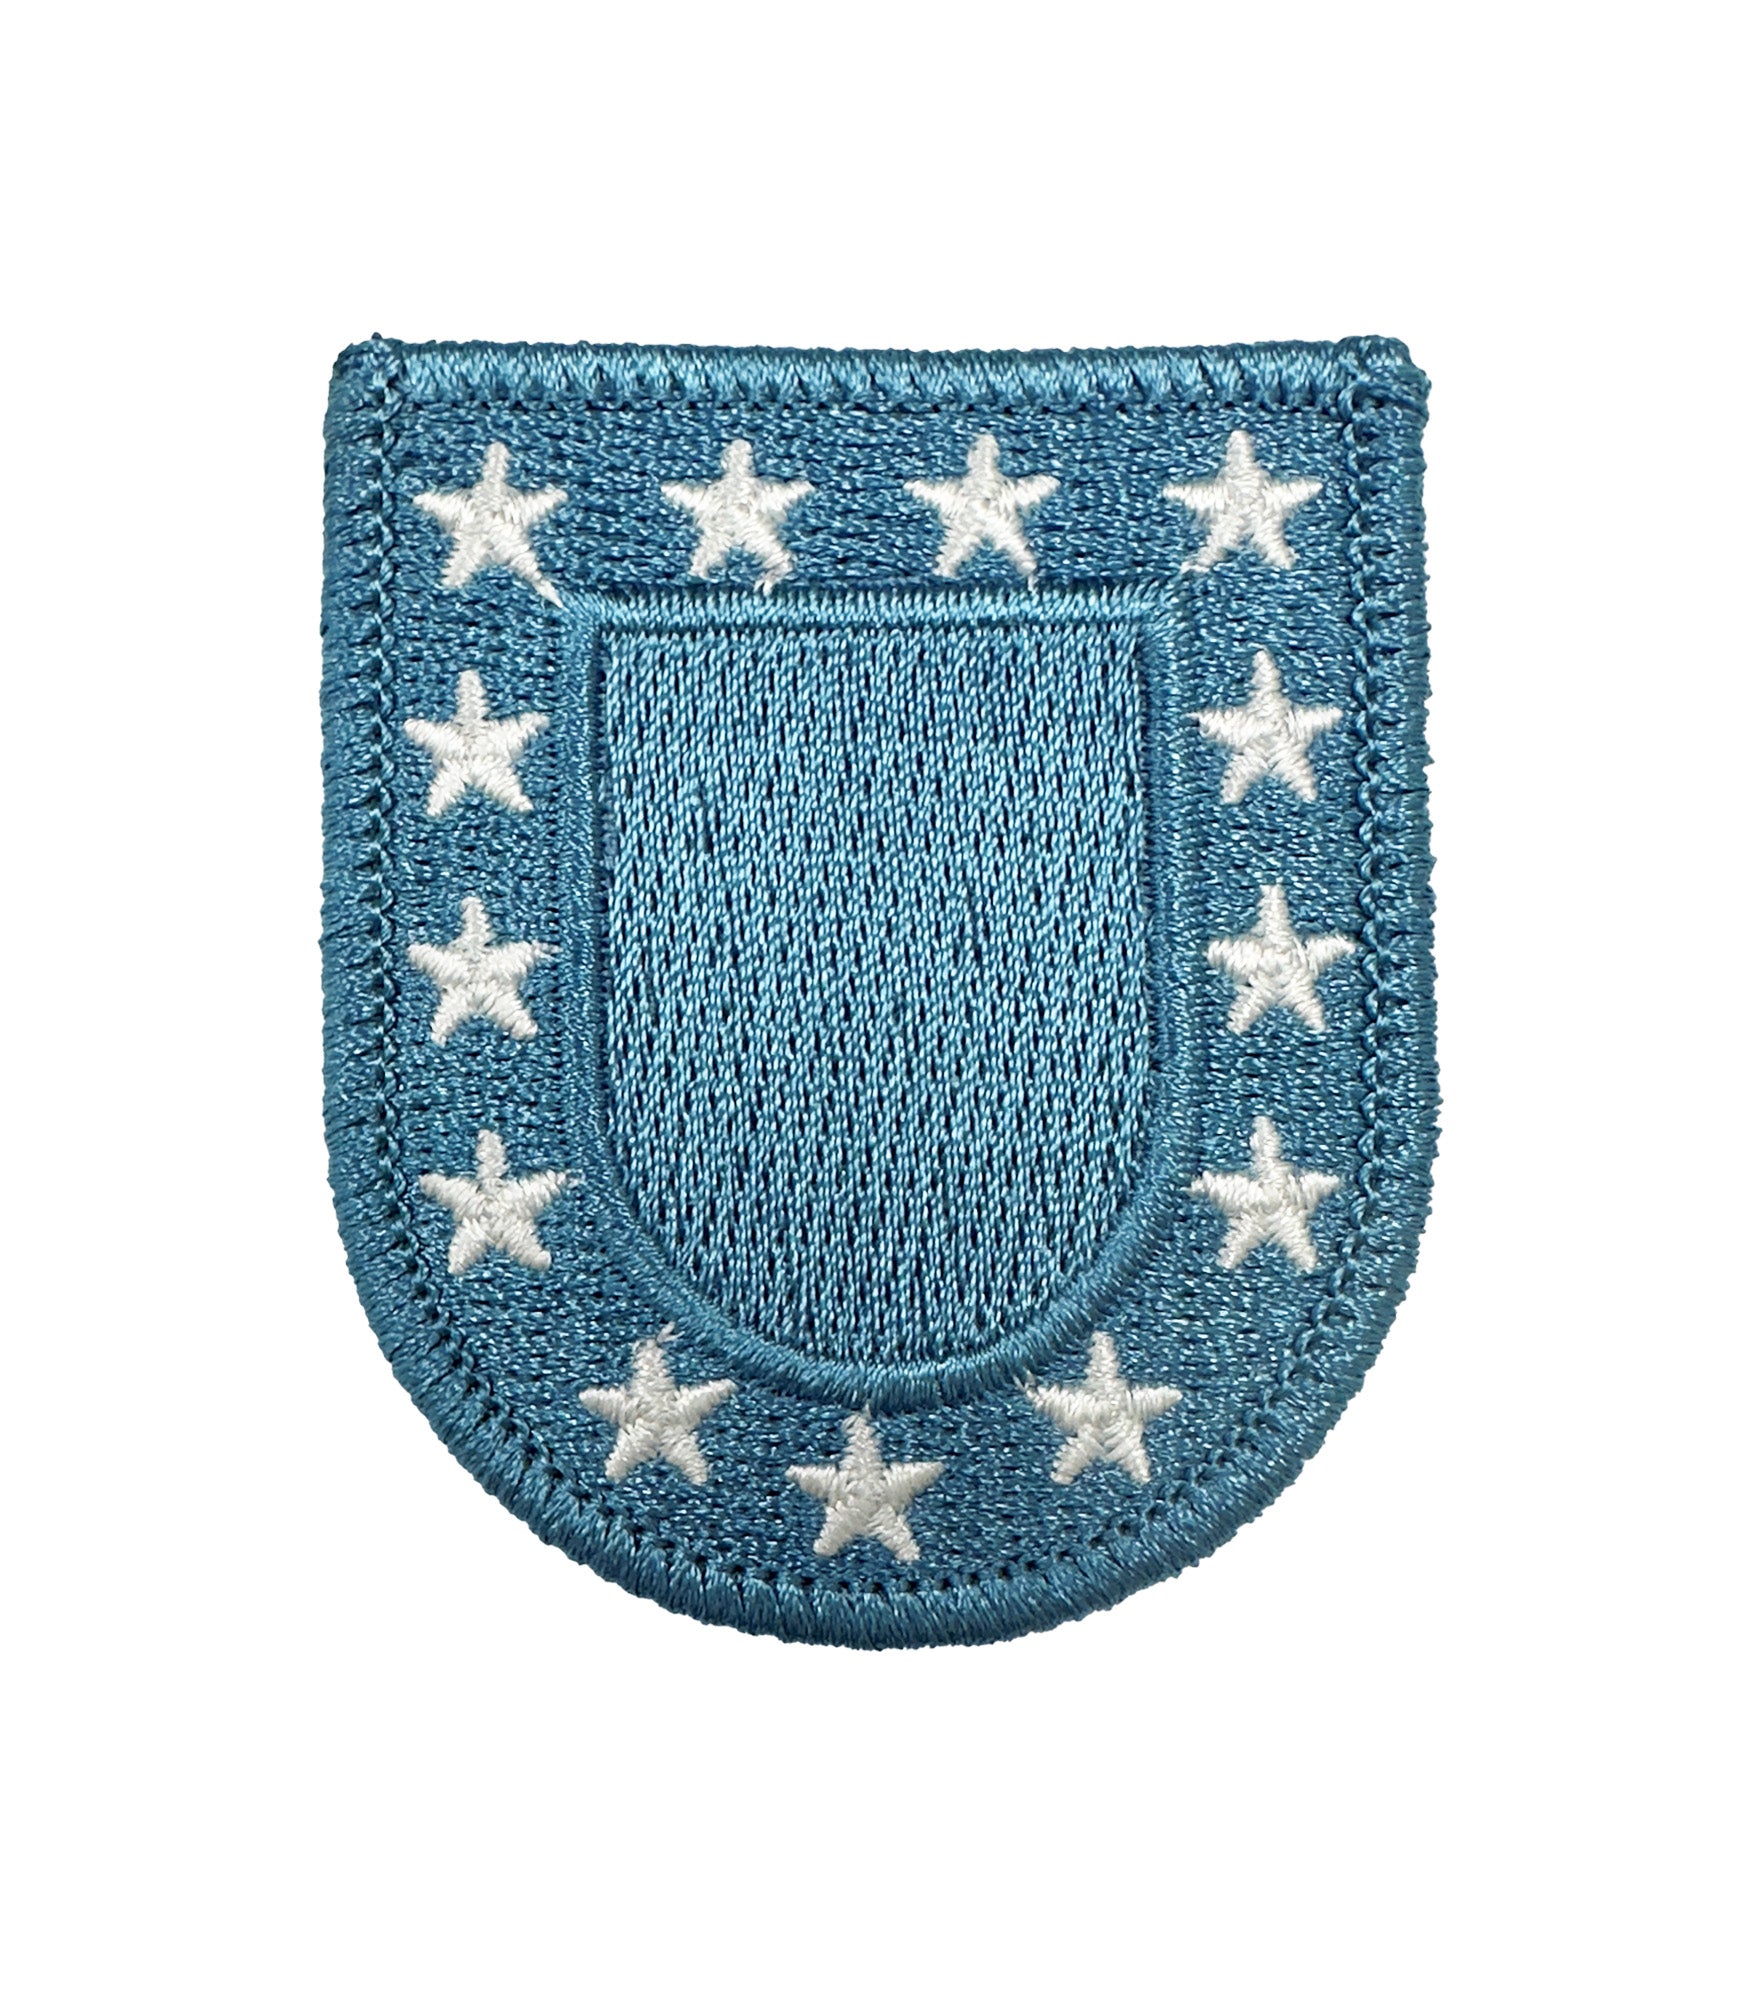 U.S. Army US Army Blue with White stars Flash – Sta-Brite Insignia Inc.